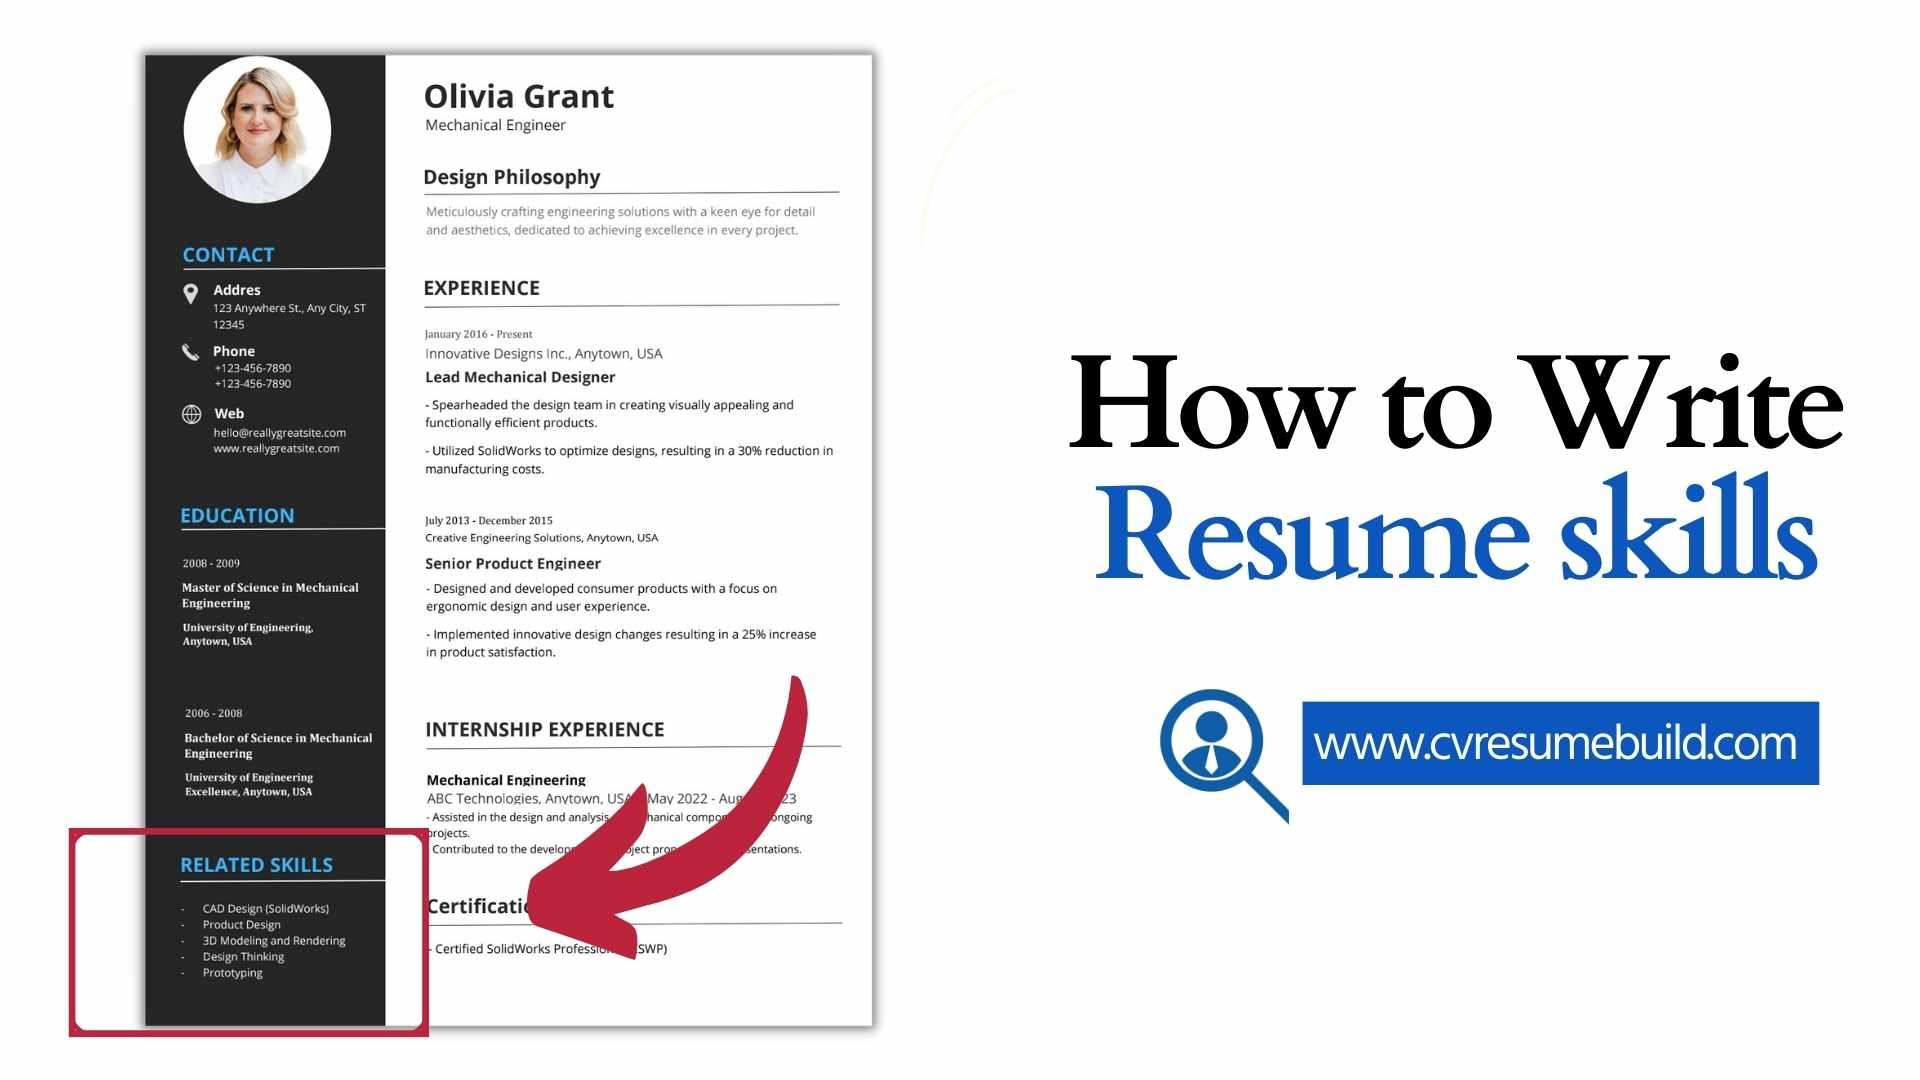 How to Write Resume skills